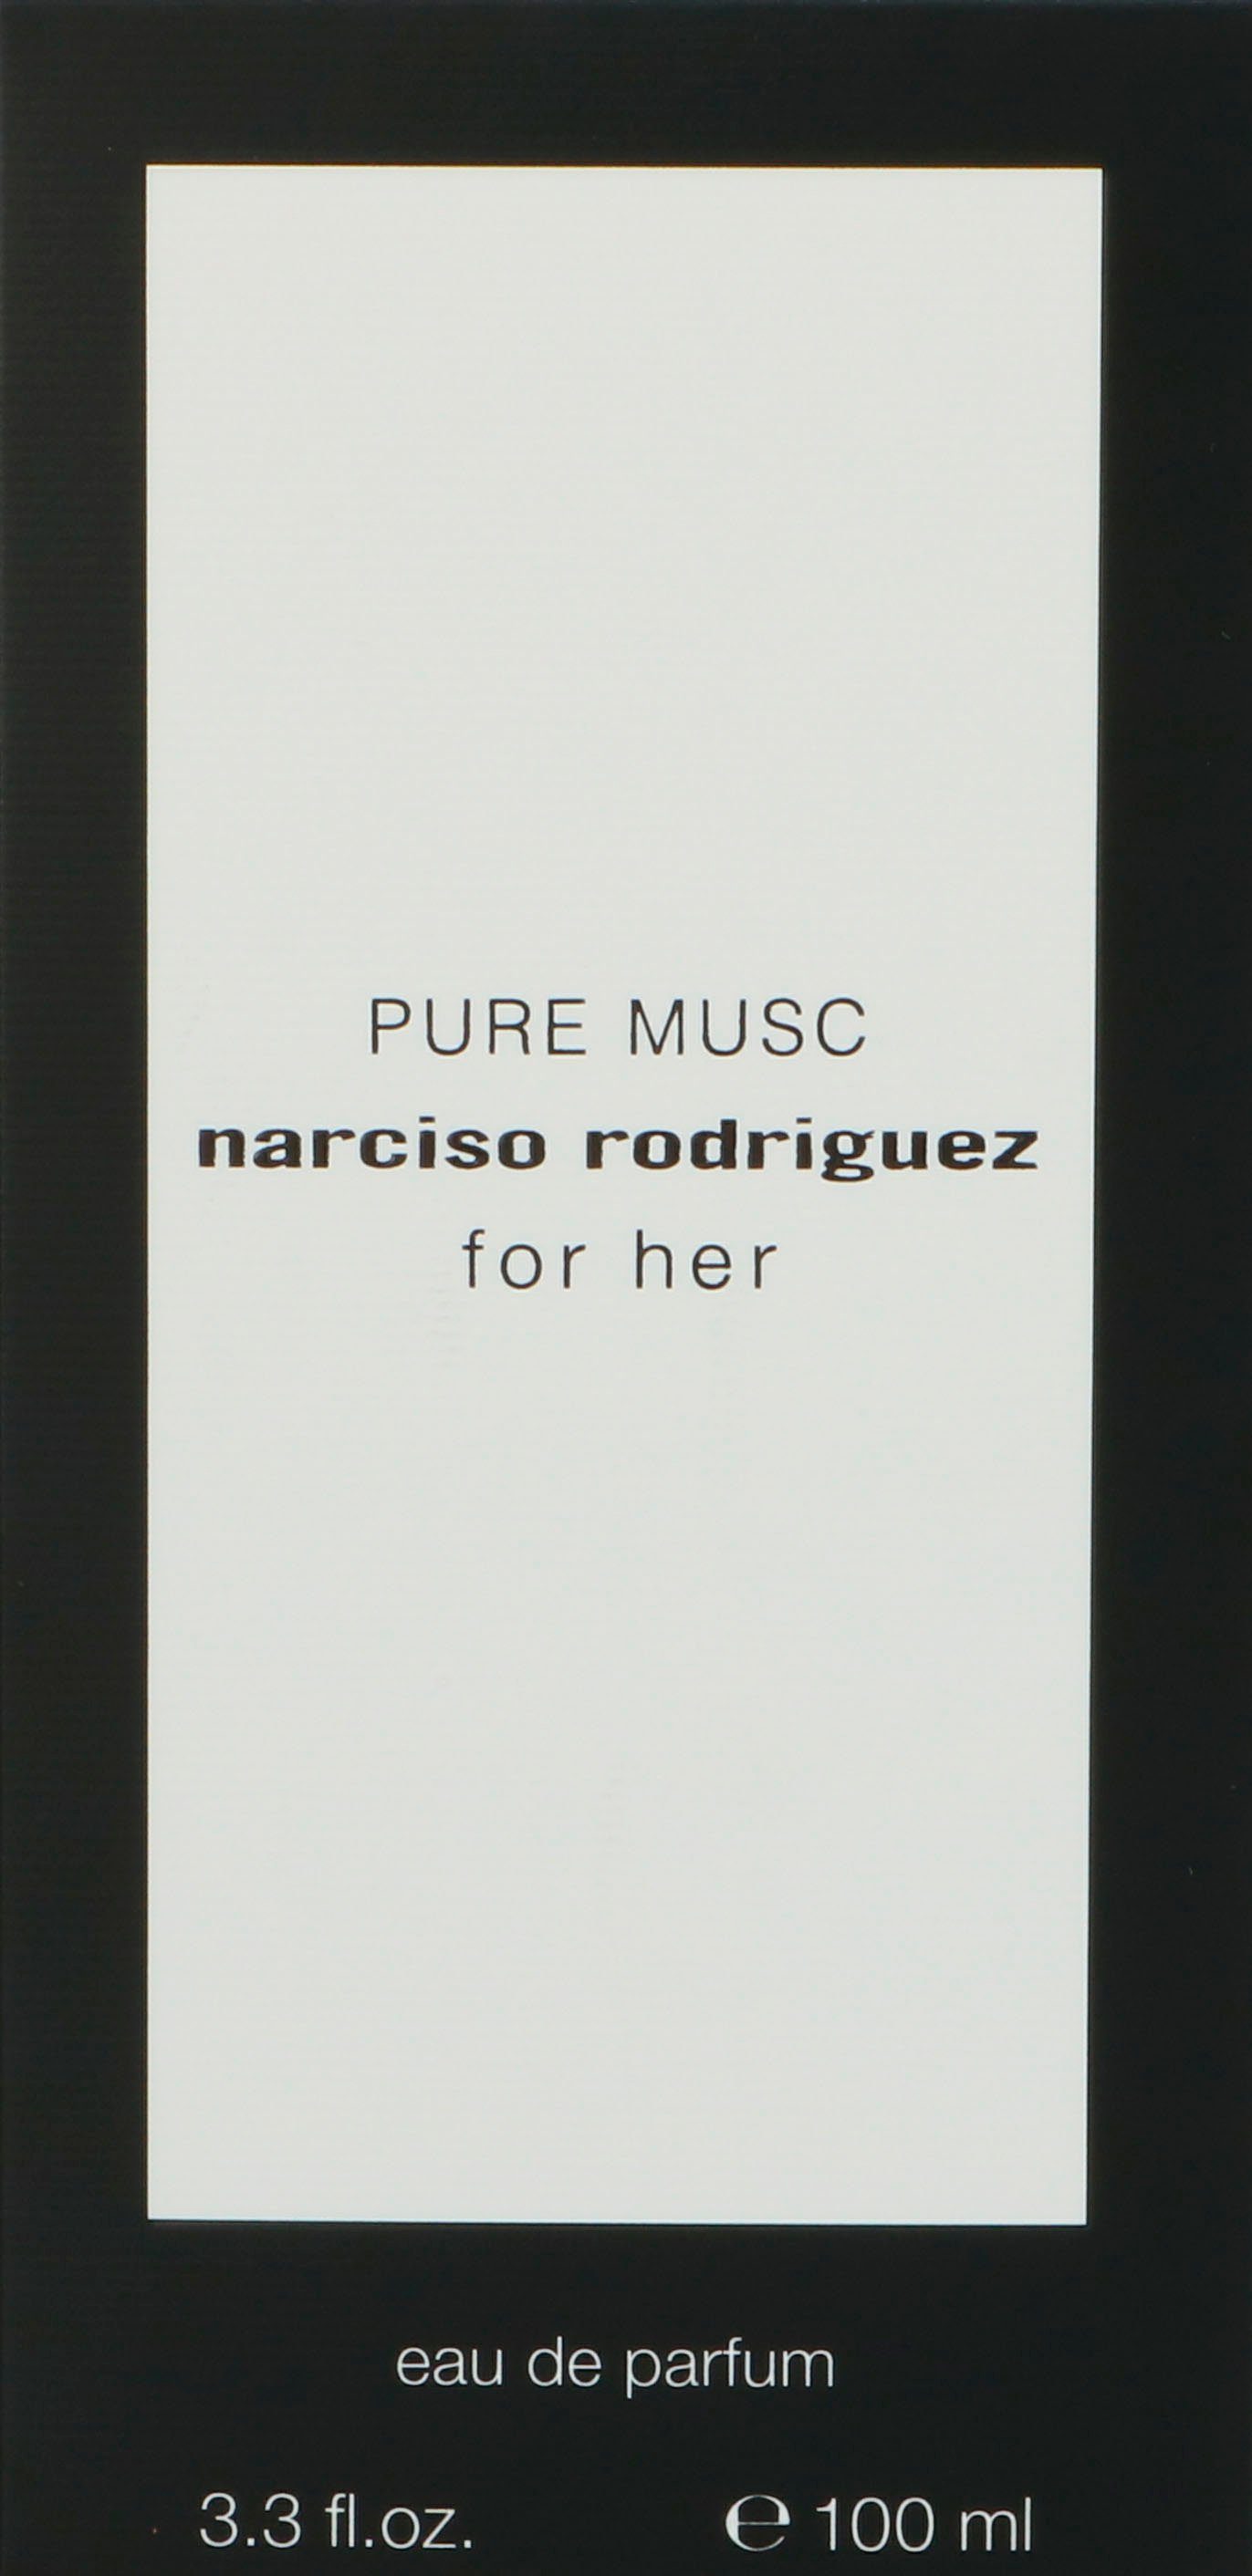 Pure Musc Rodriguez Parfum Her for Narciso narciso de rodriguez Eau